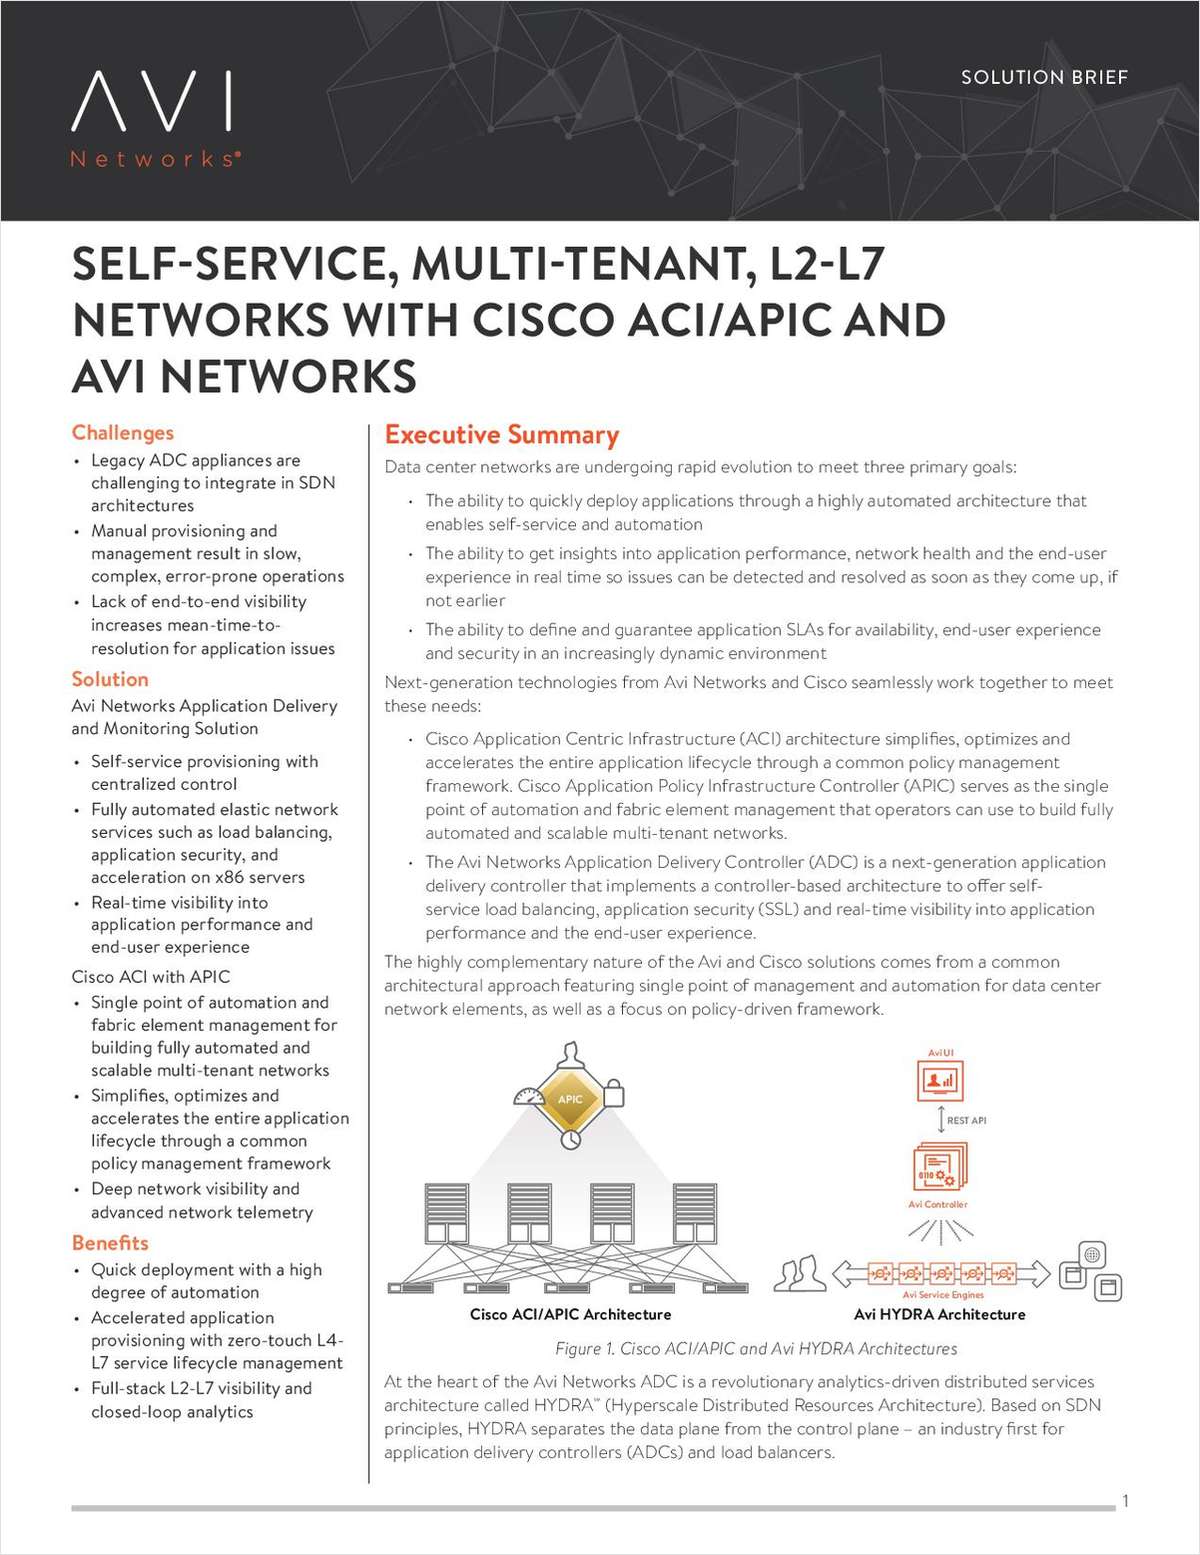 Self-Service, Multi-Tenant, L2-L7 Networks